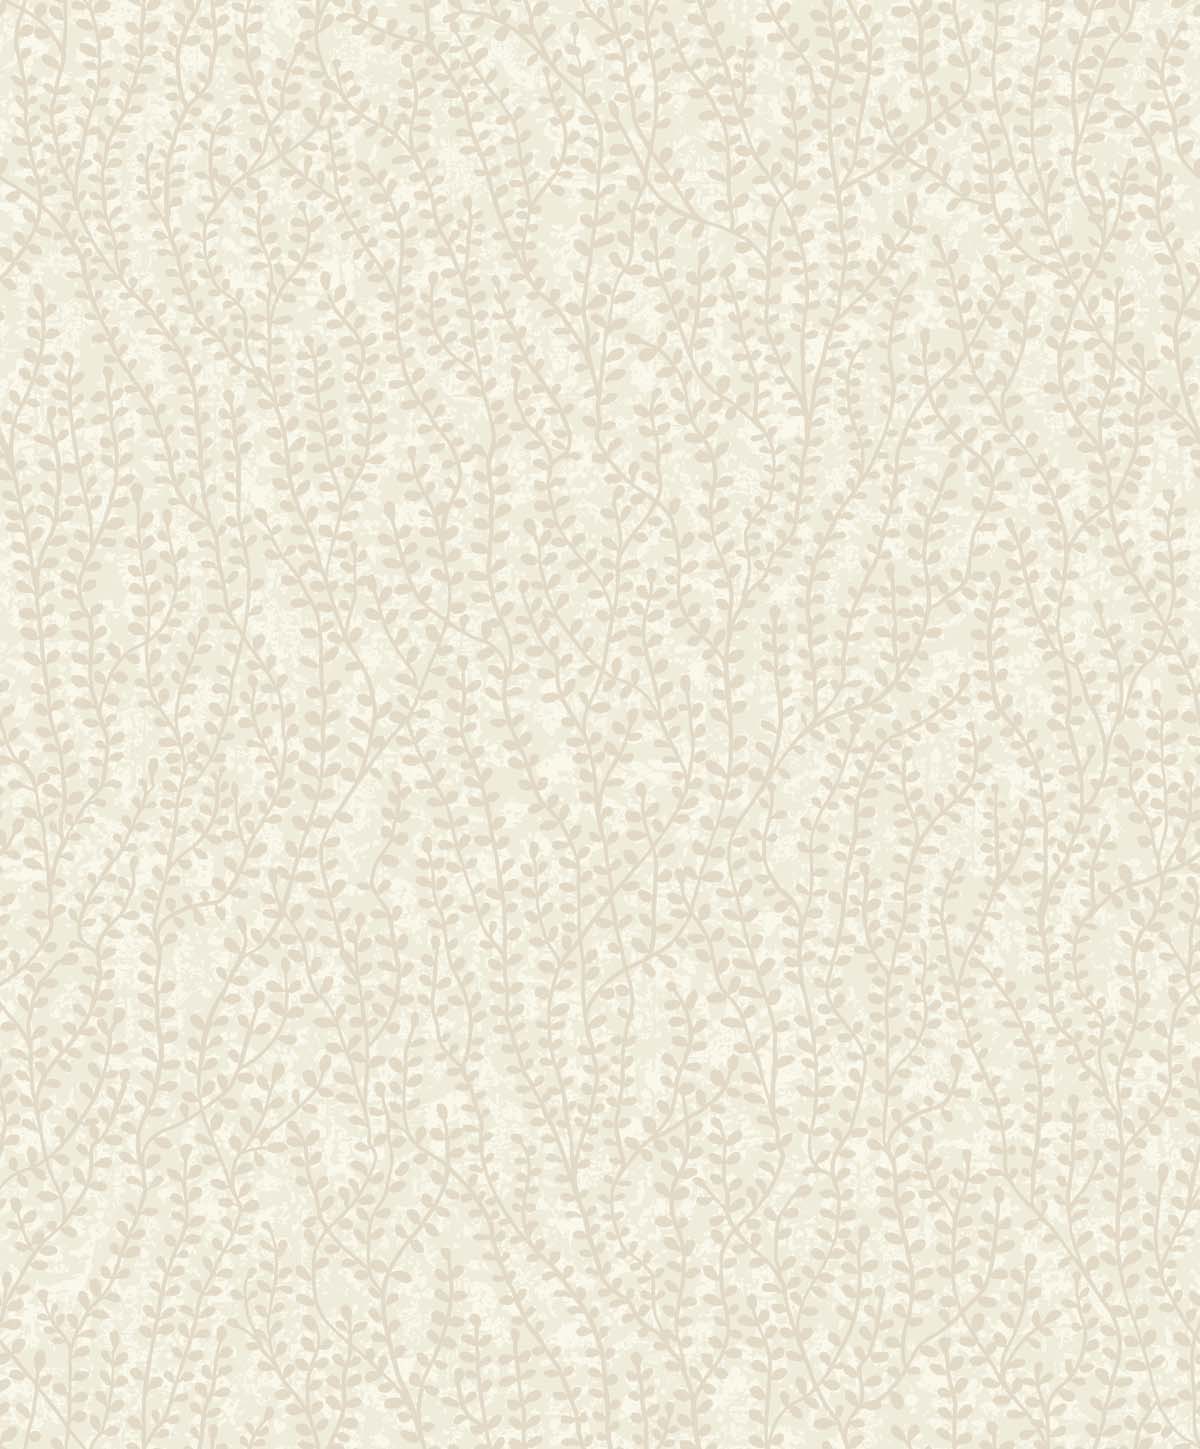 Seabrook Designs EW10605 White Heron Seaweed Beaded Branches  Wallpaper Off White Satin